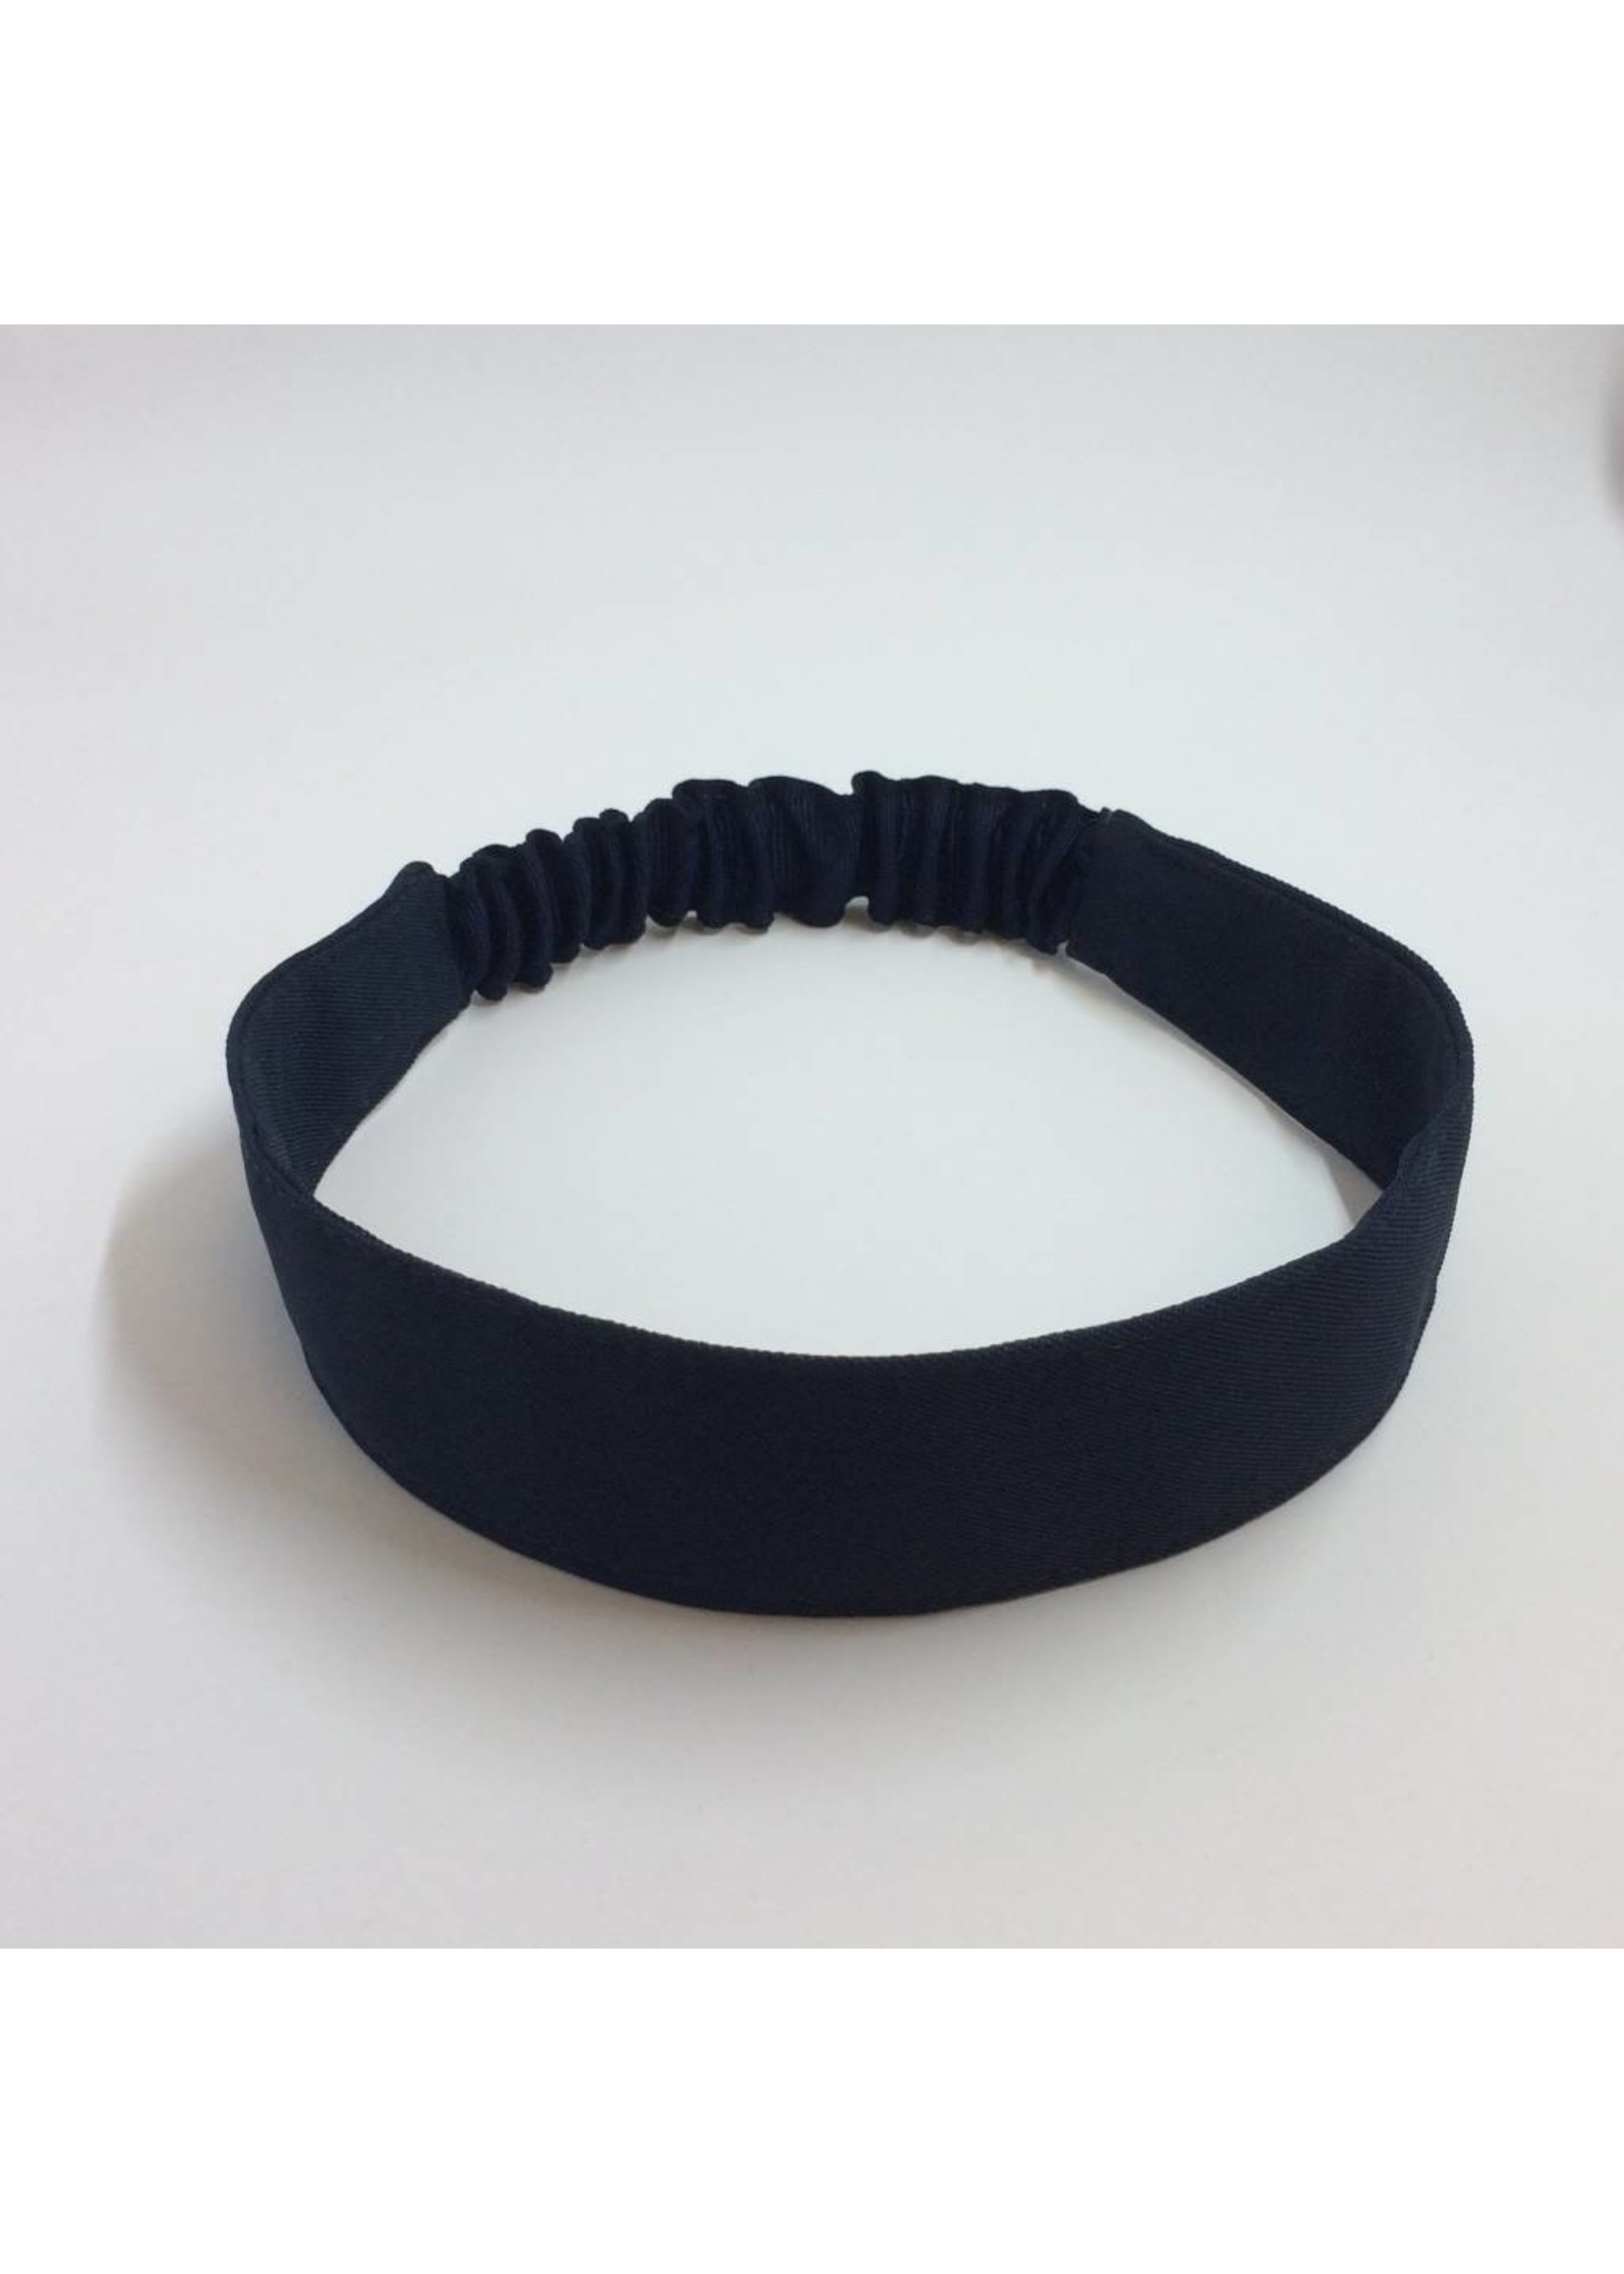 UNIFORM Navy Soft Headband, elastic back approx. 1 1/2" wide